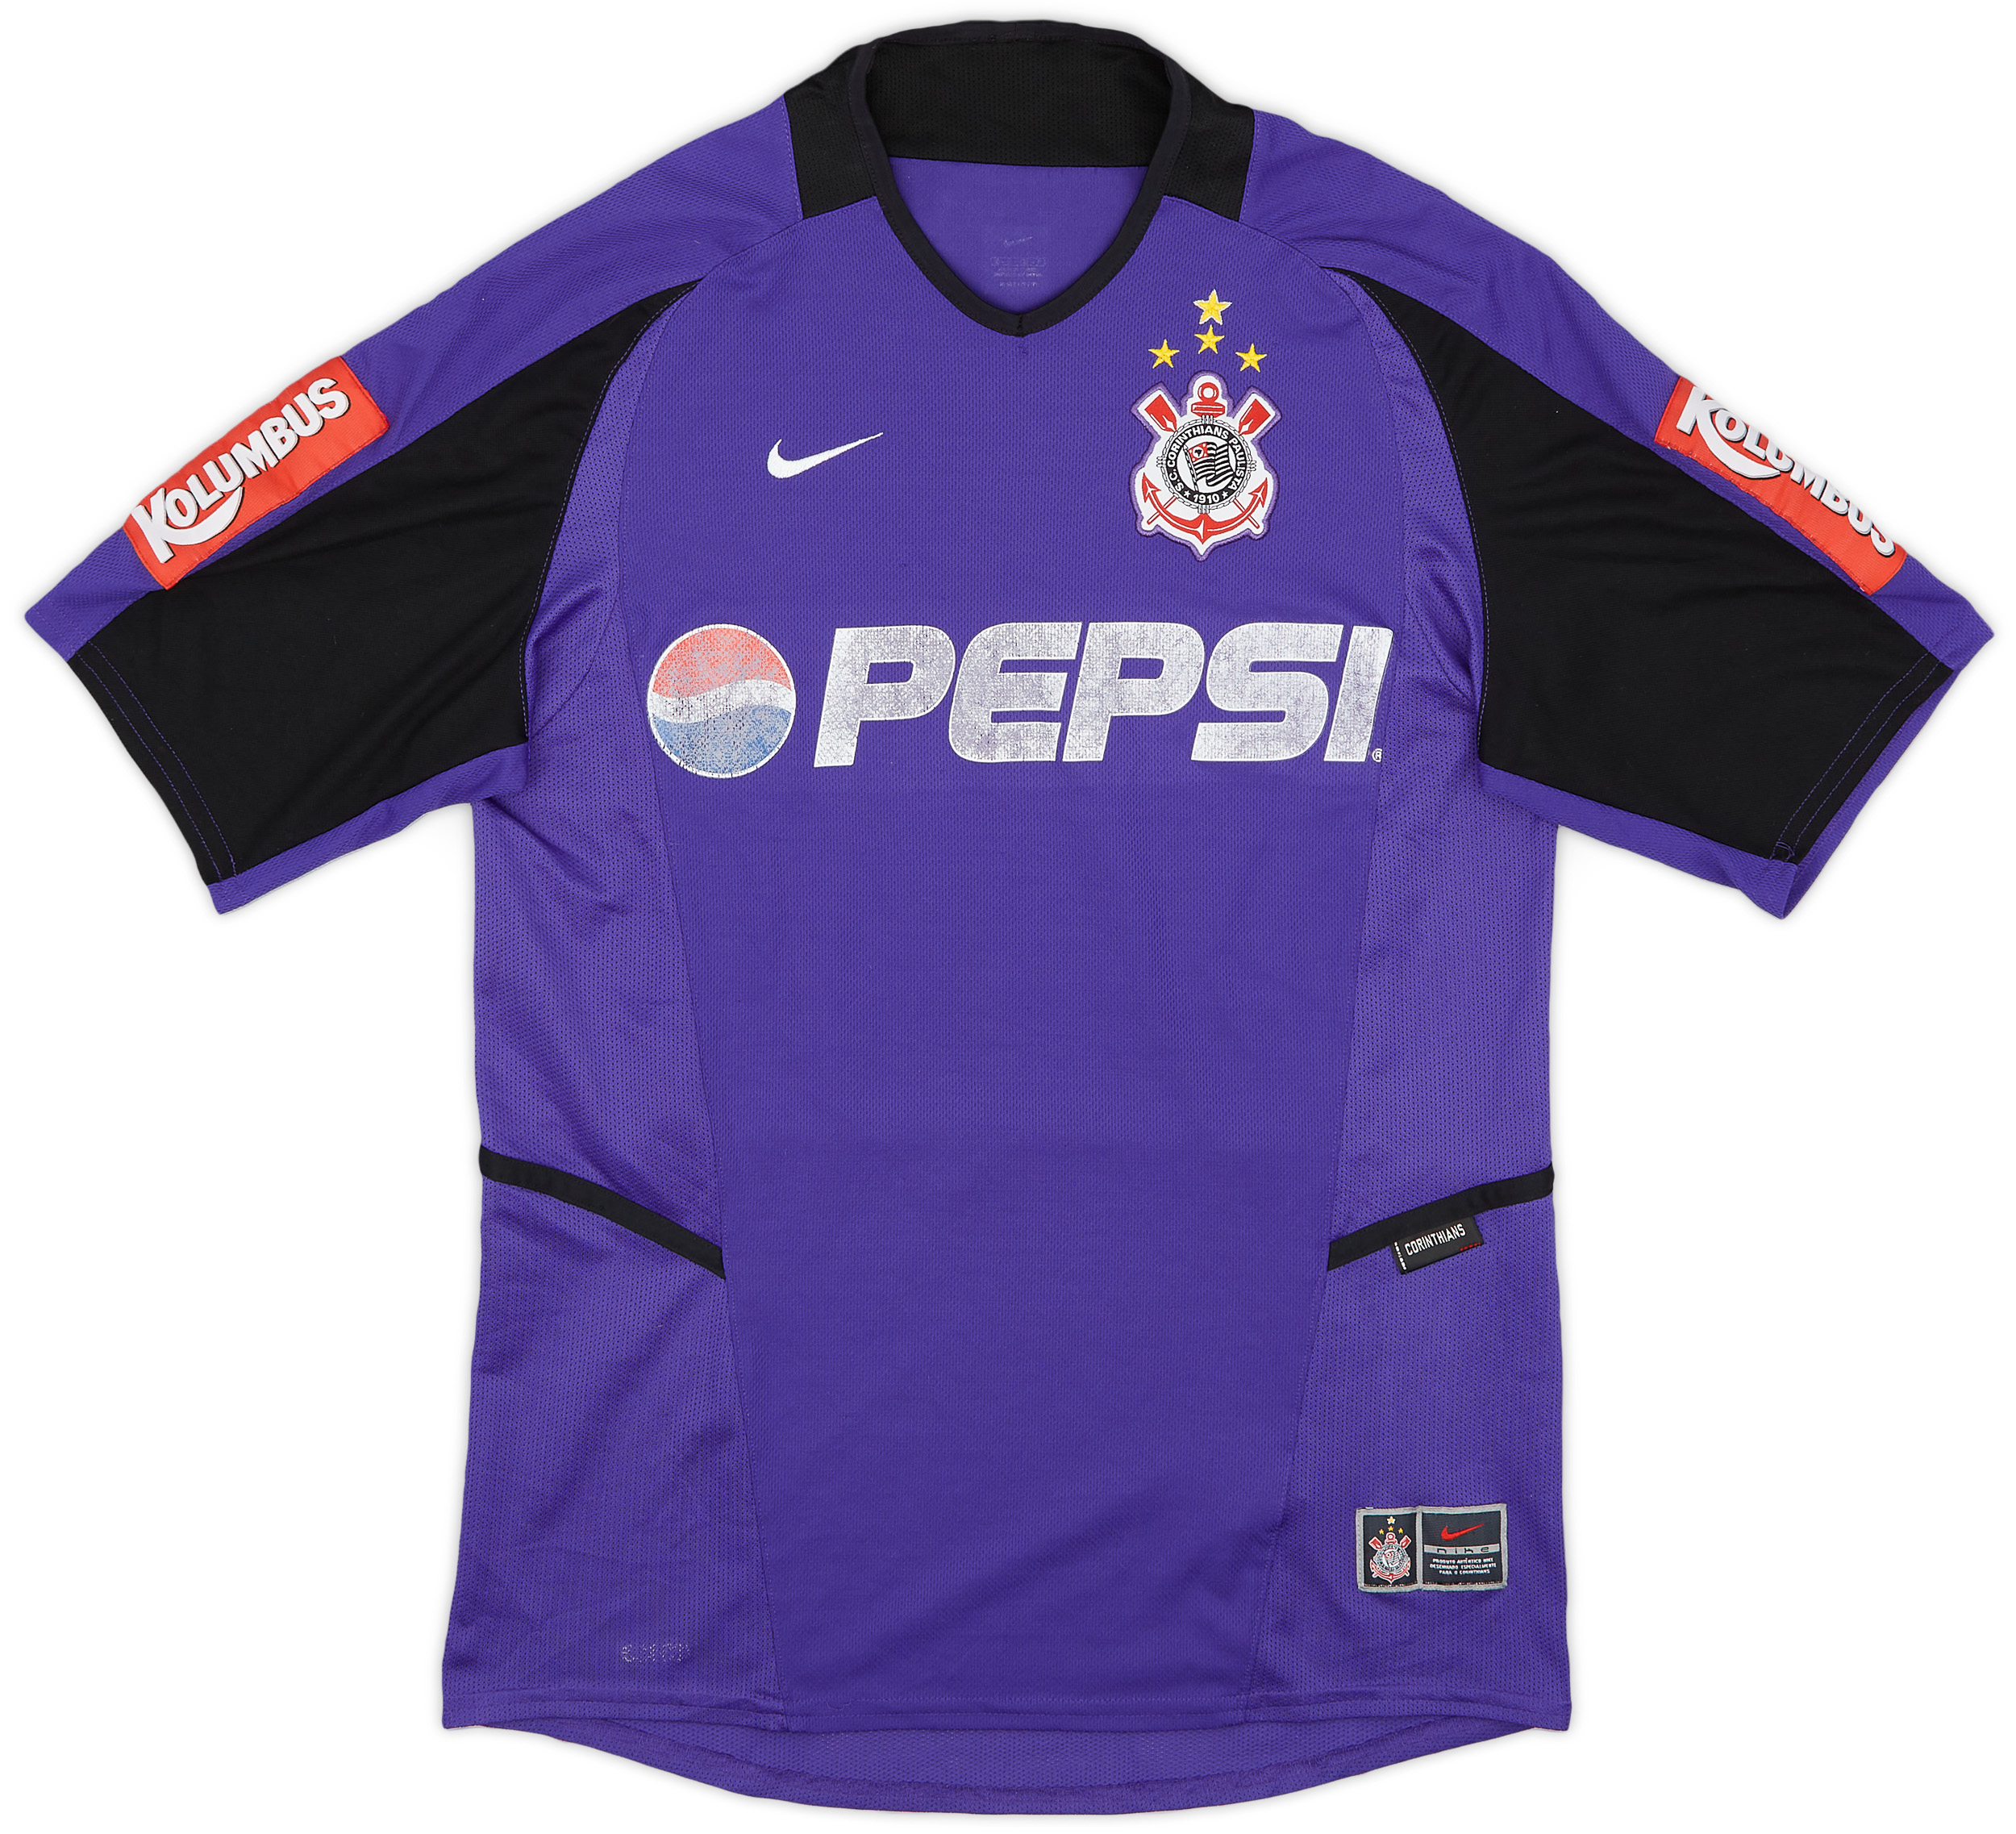 Corinthians  Torwart Shirt (Original)